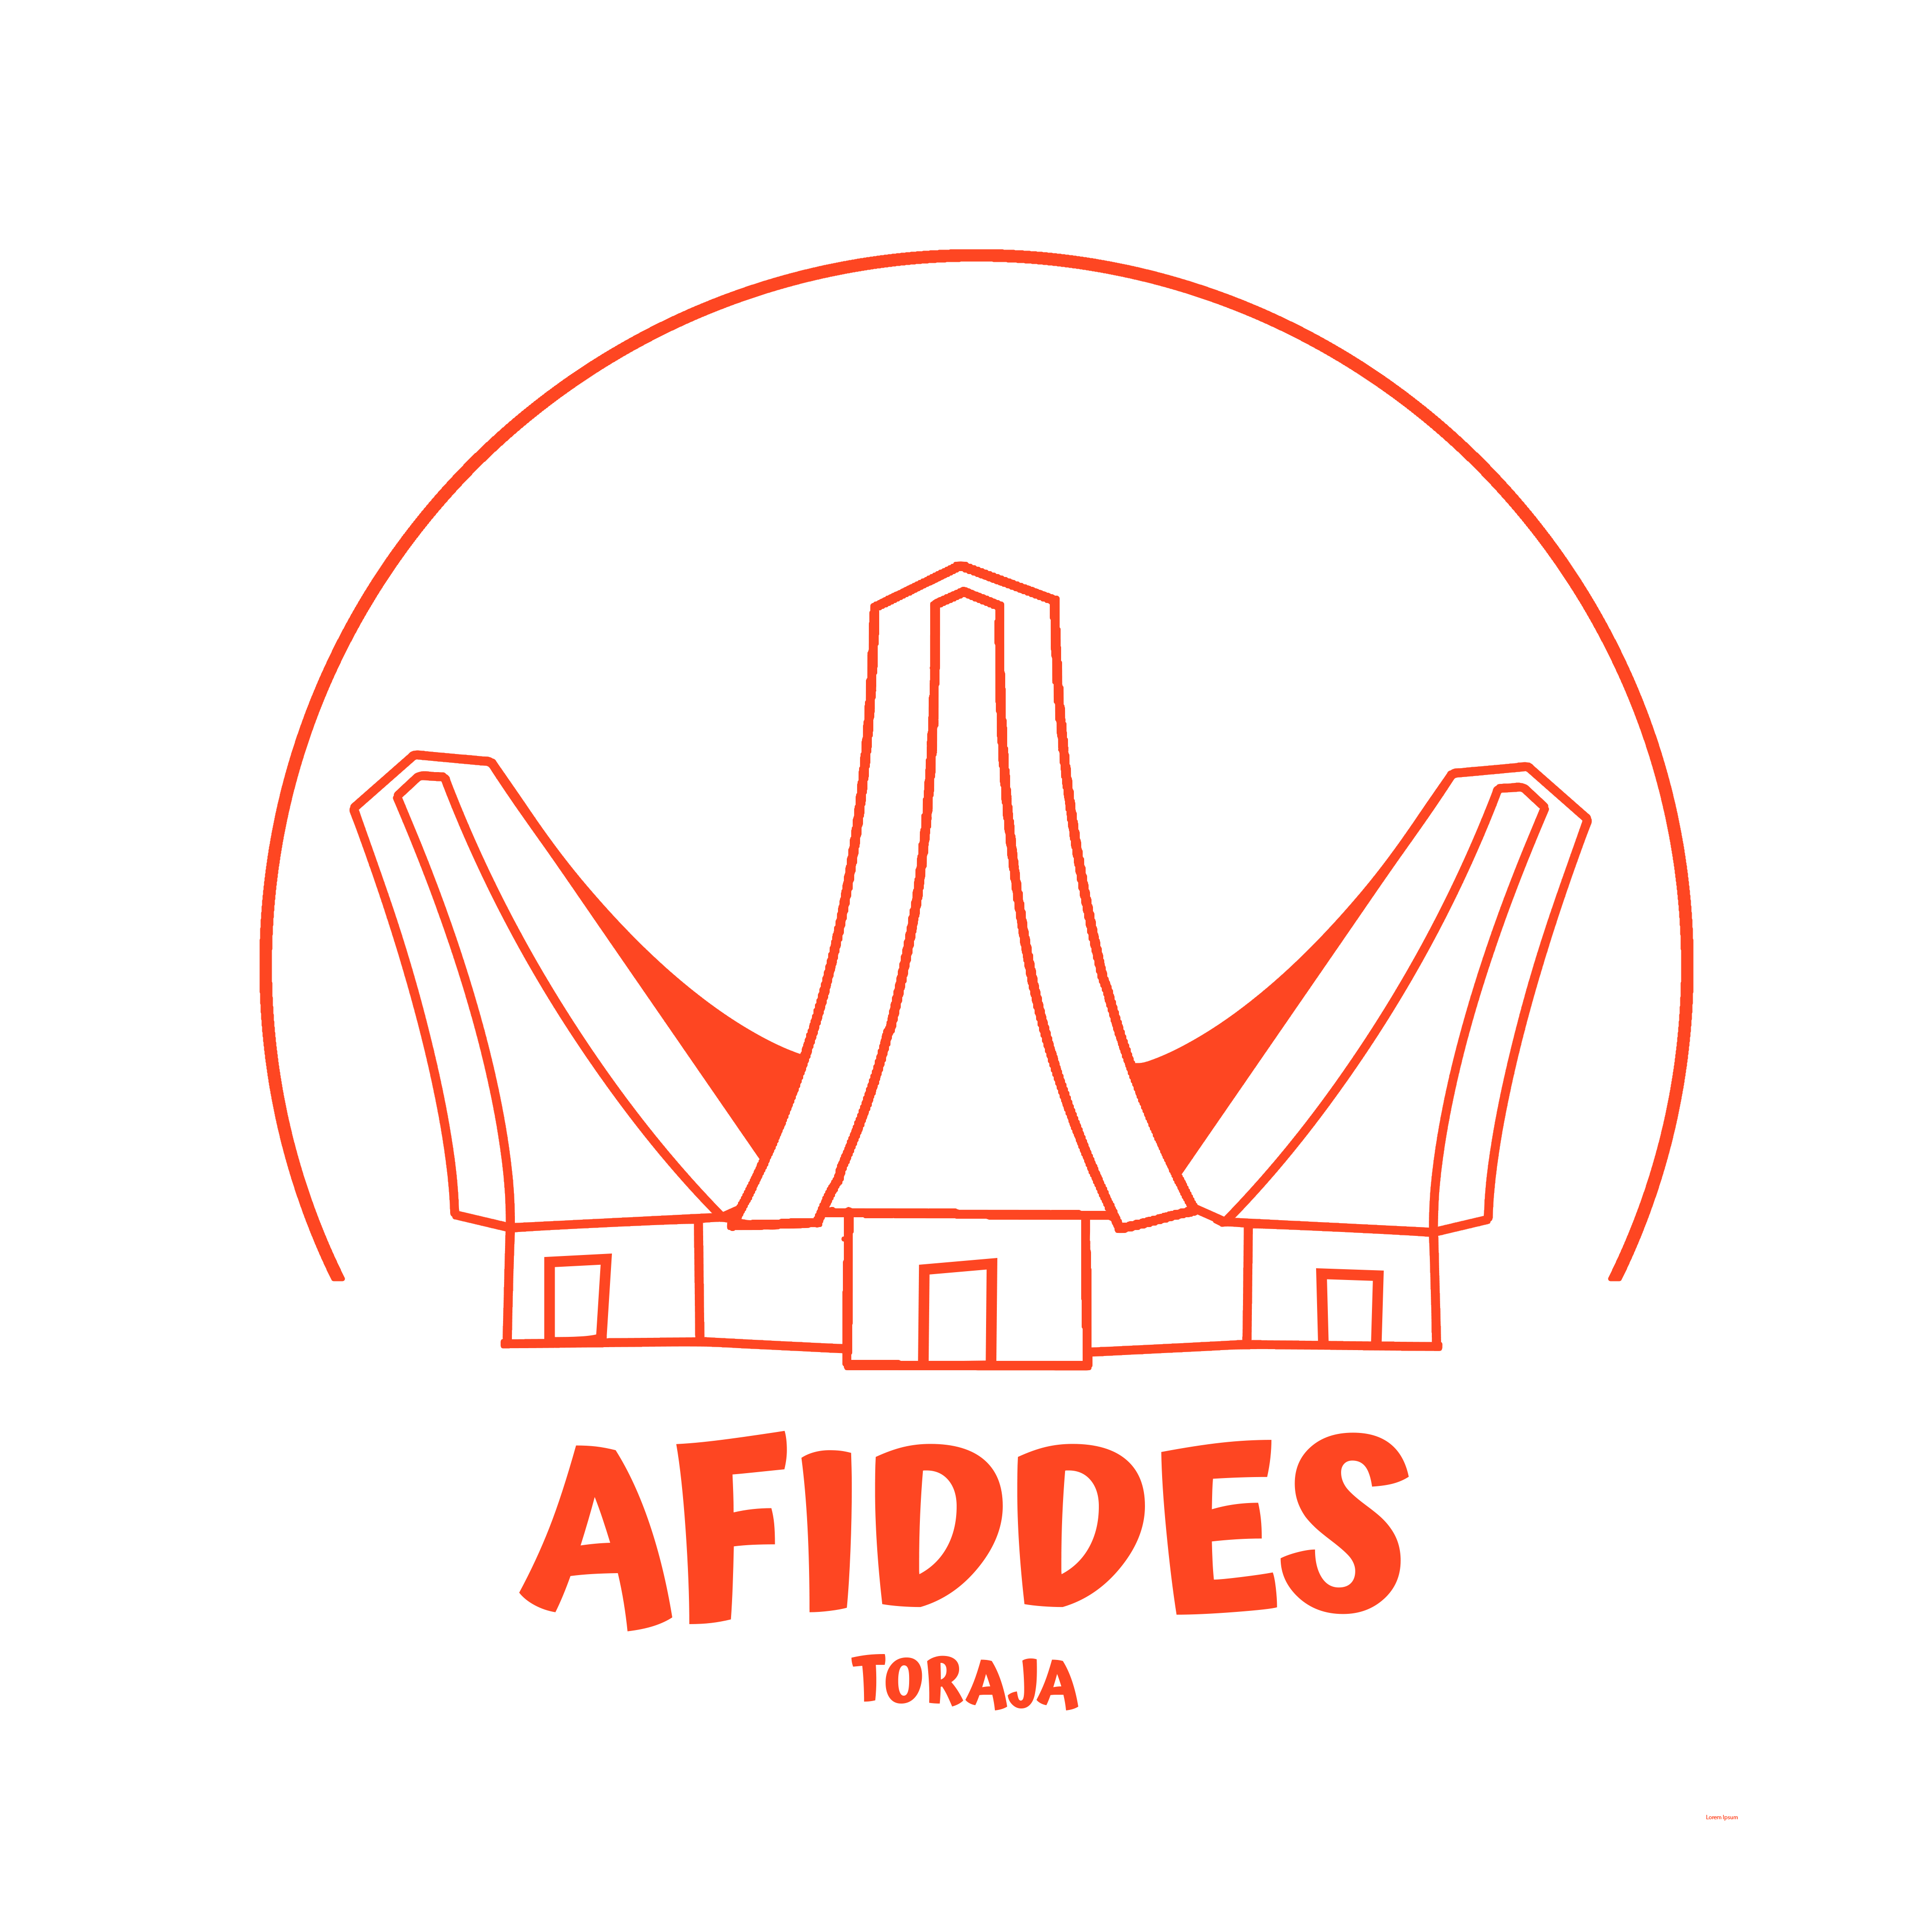 Association Afiddes